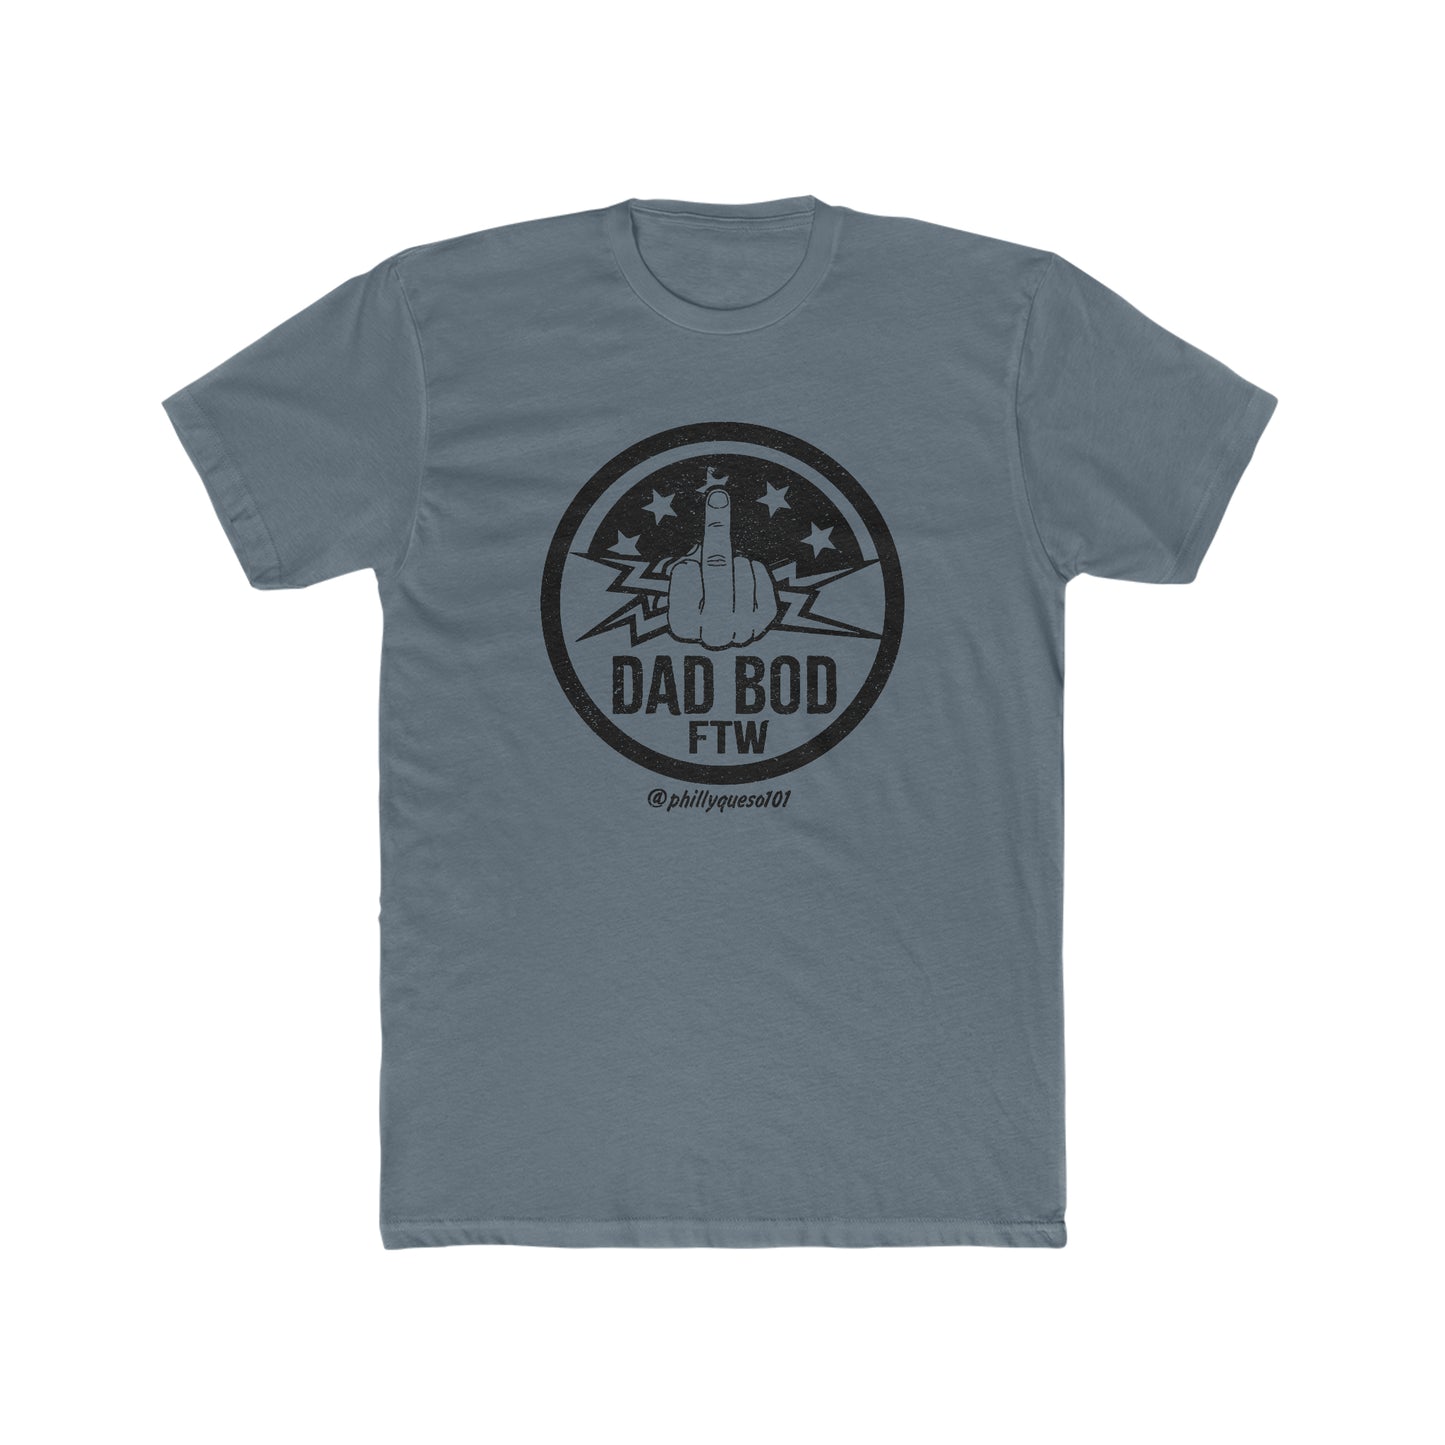 #DadBod FTW Graphic T-Shirt